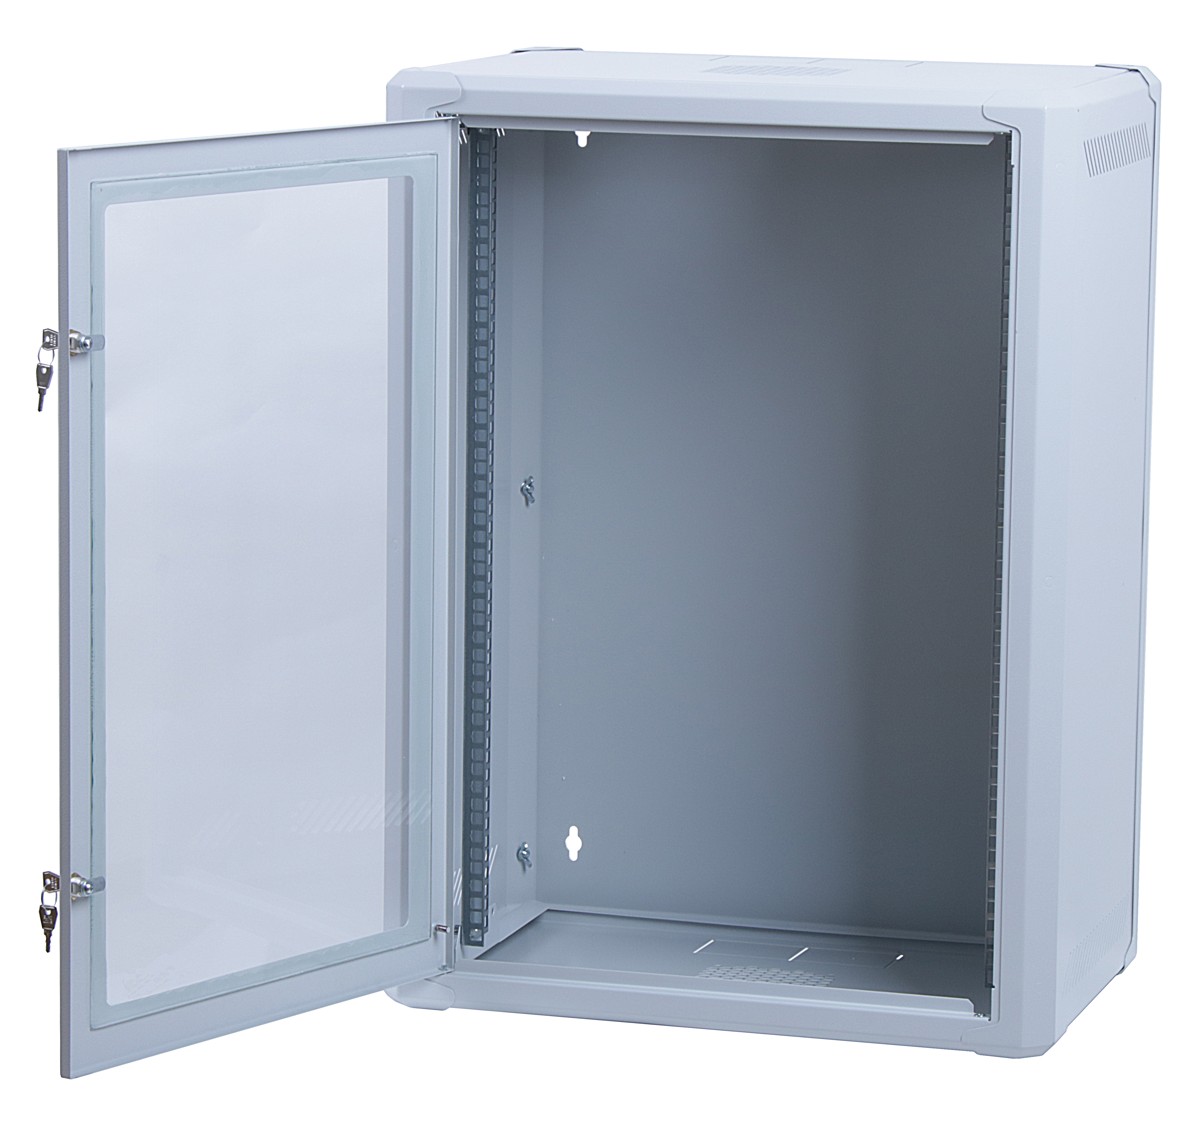 Masterlan one-piece rack data cabinet 19" 15U/400mm, disassembled - FLAT PACK, glass door